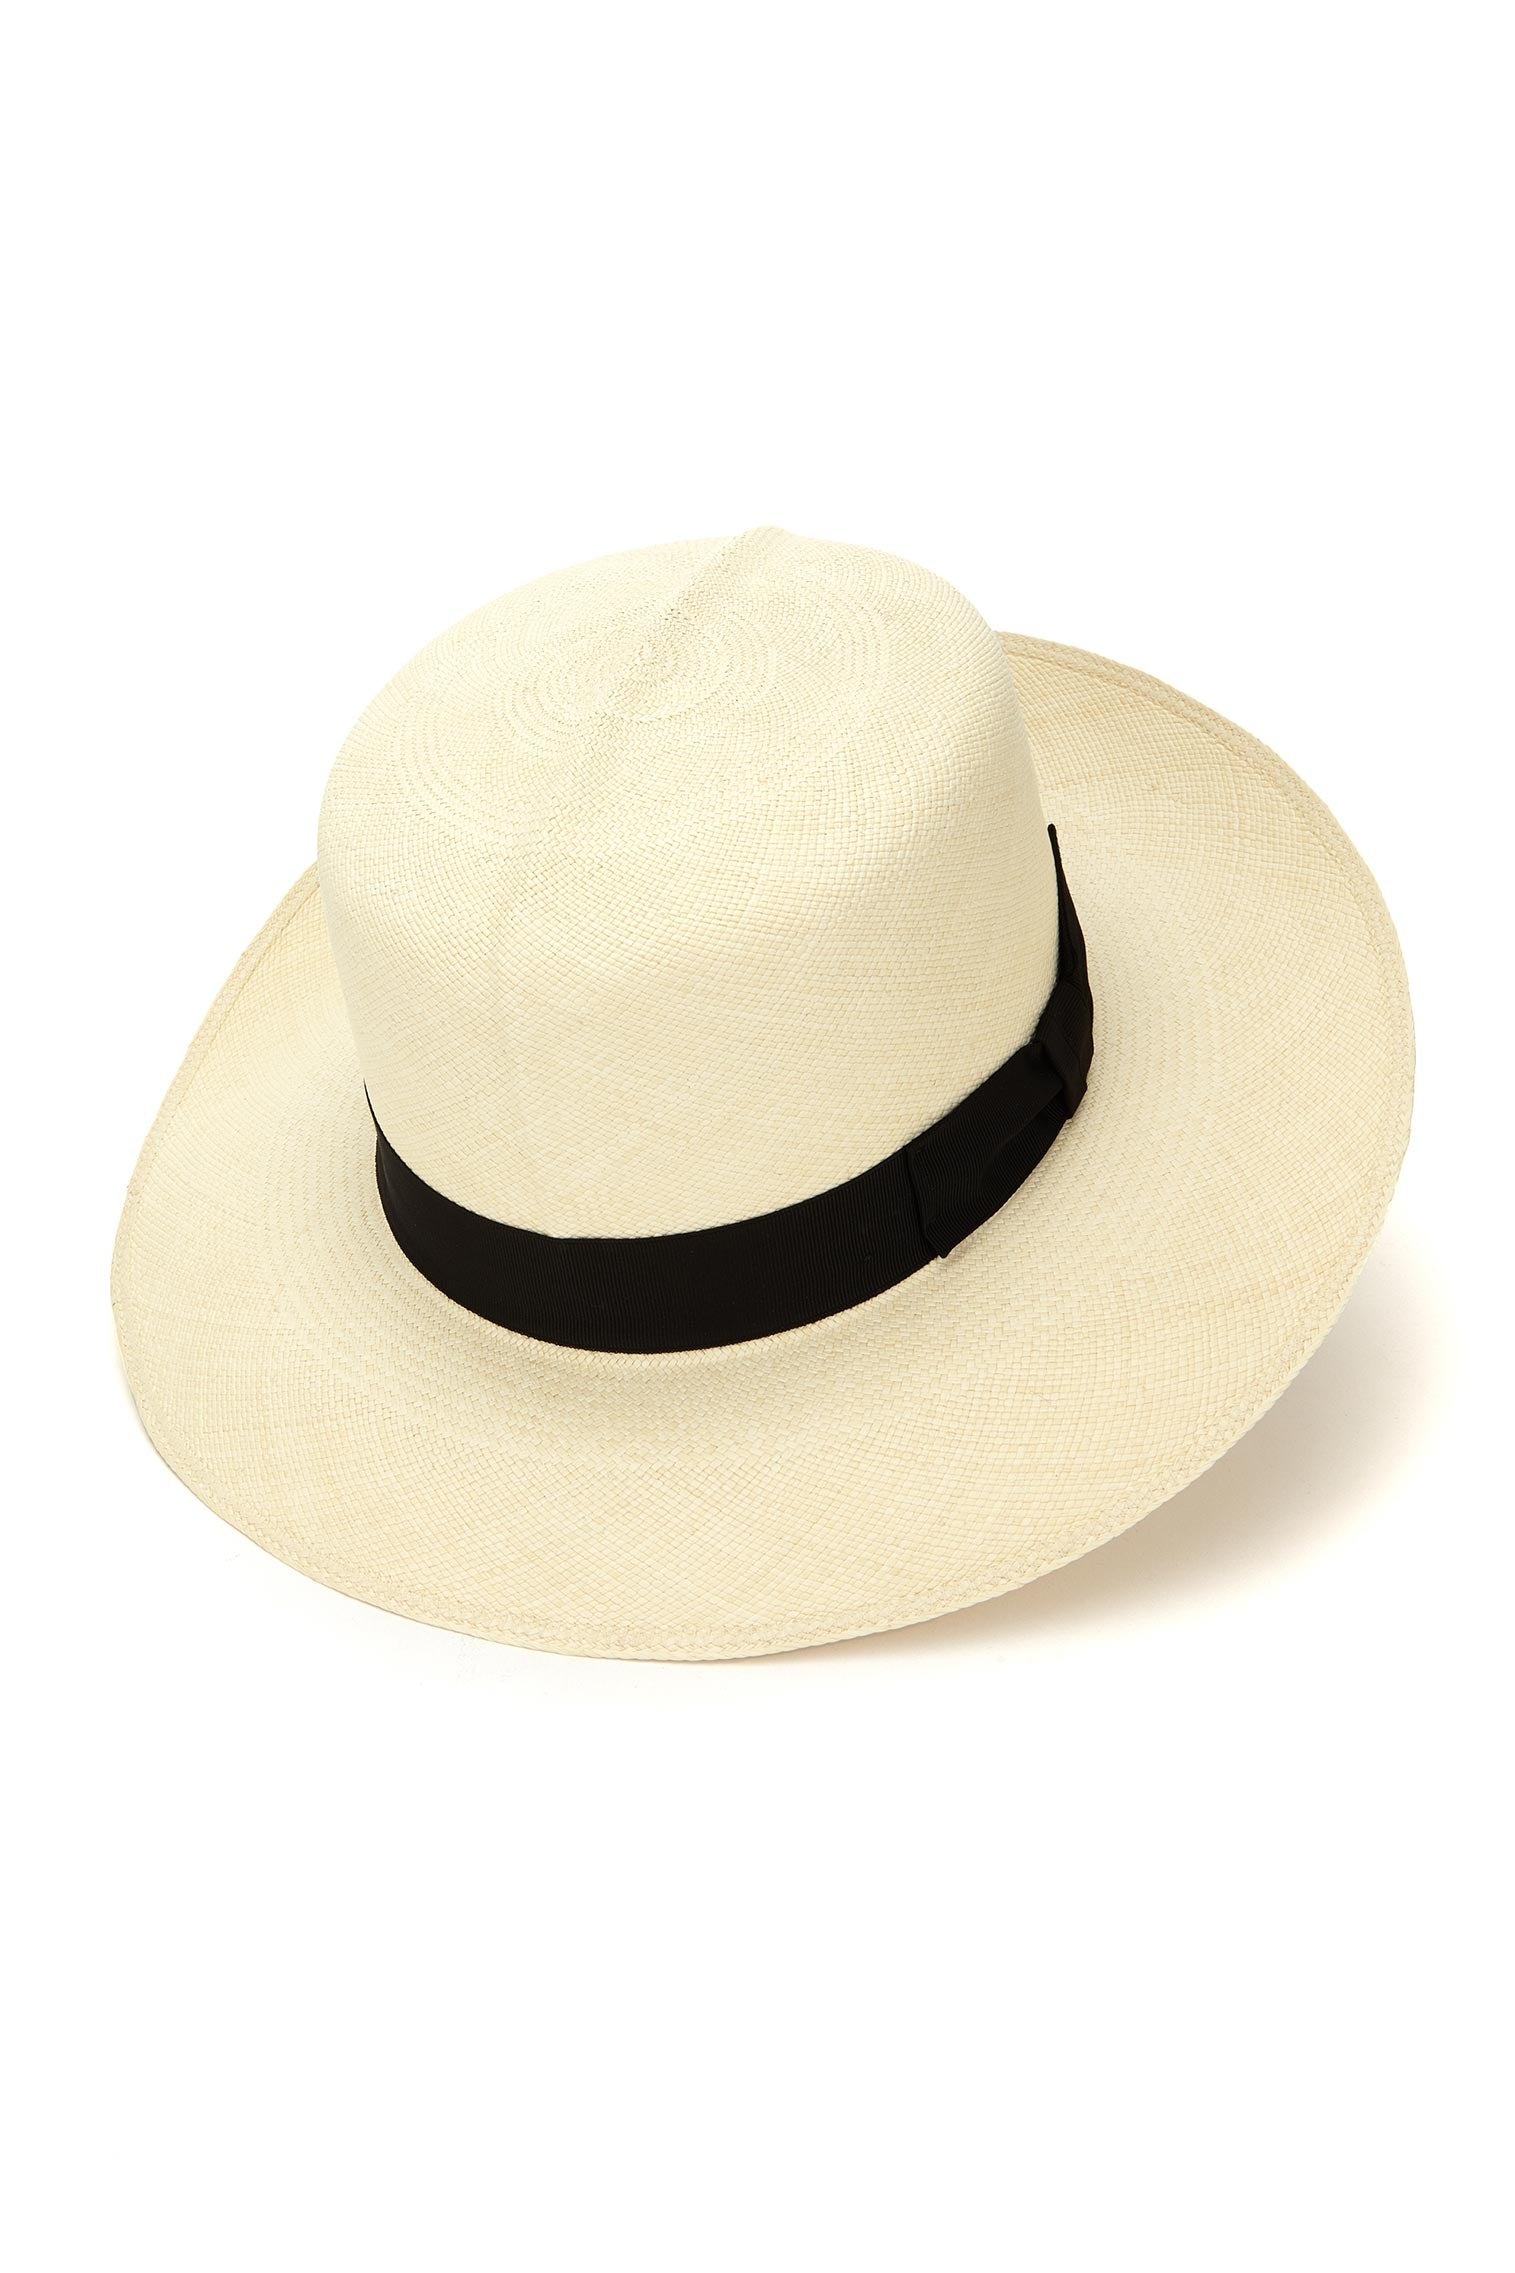 Rollable Superfino Montecristi Panama - Best Selling Hats - Lock & Co. Hatters London UK